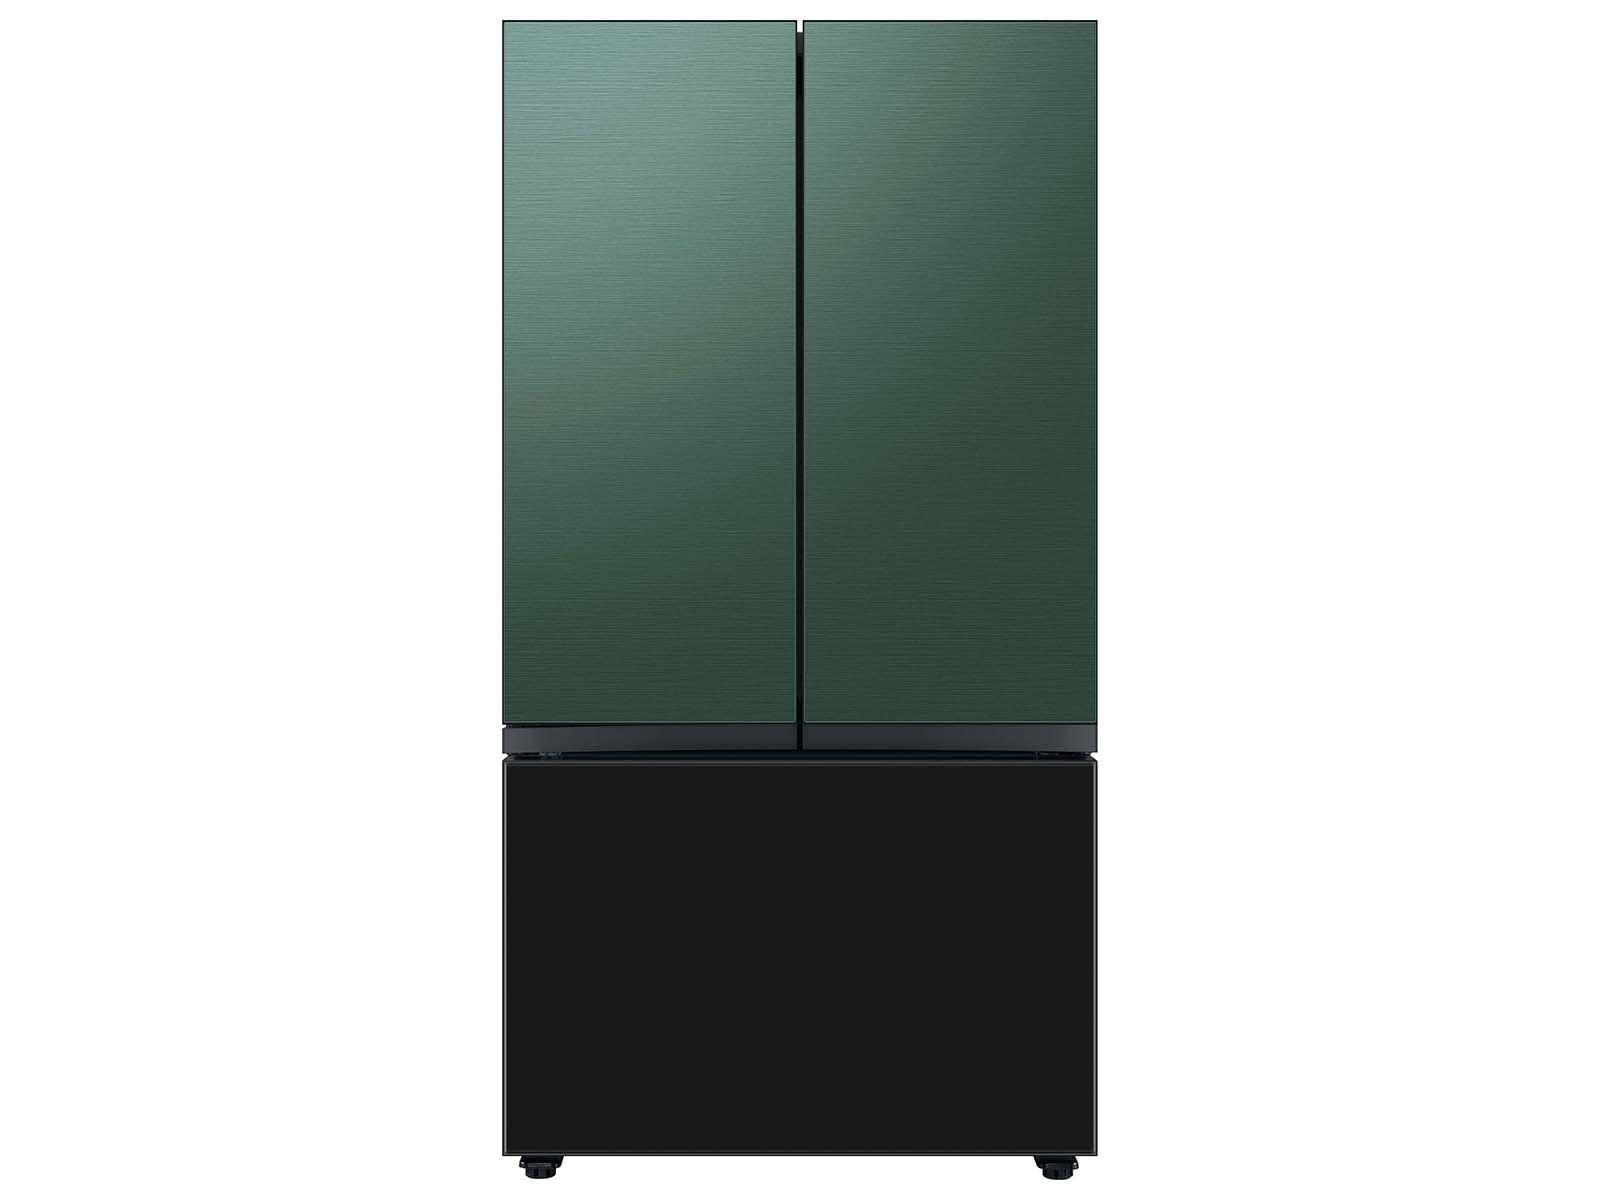 Thumbnail image of Bespoke 3-Door French Door Refrigerator Panel in Charcoal Glass - Bottom Panel